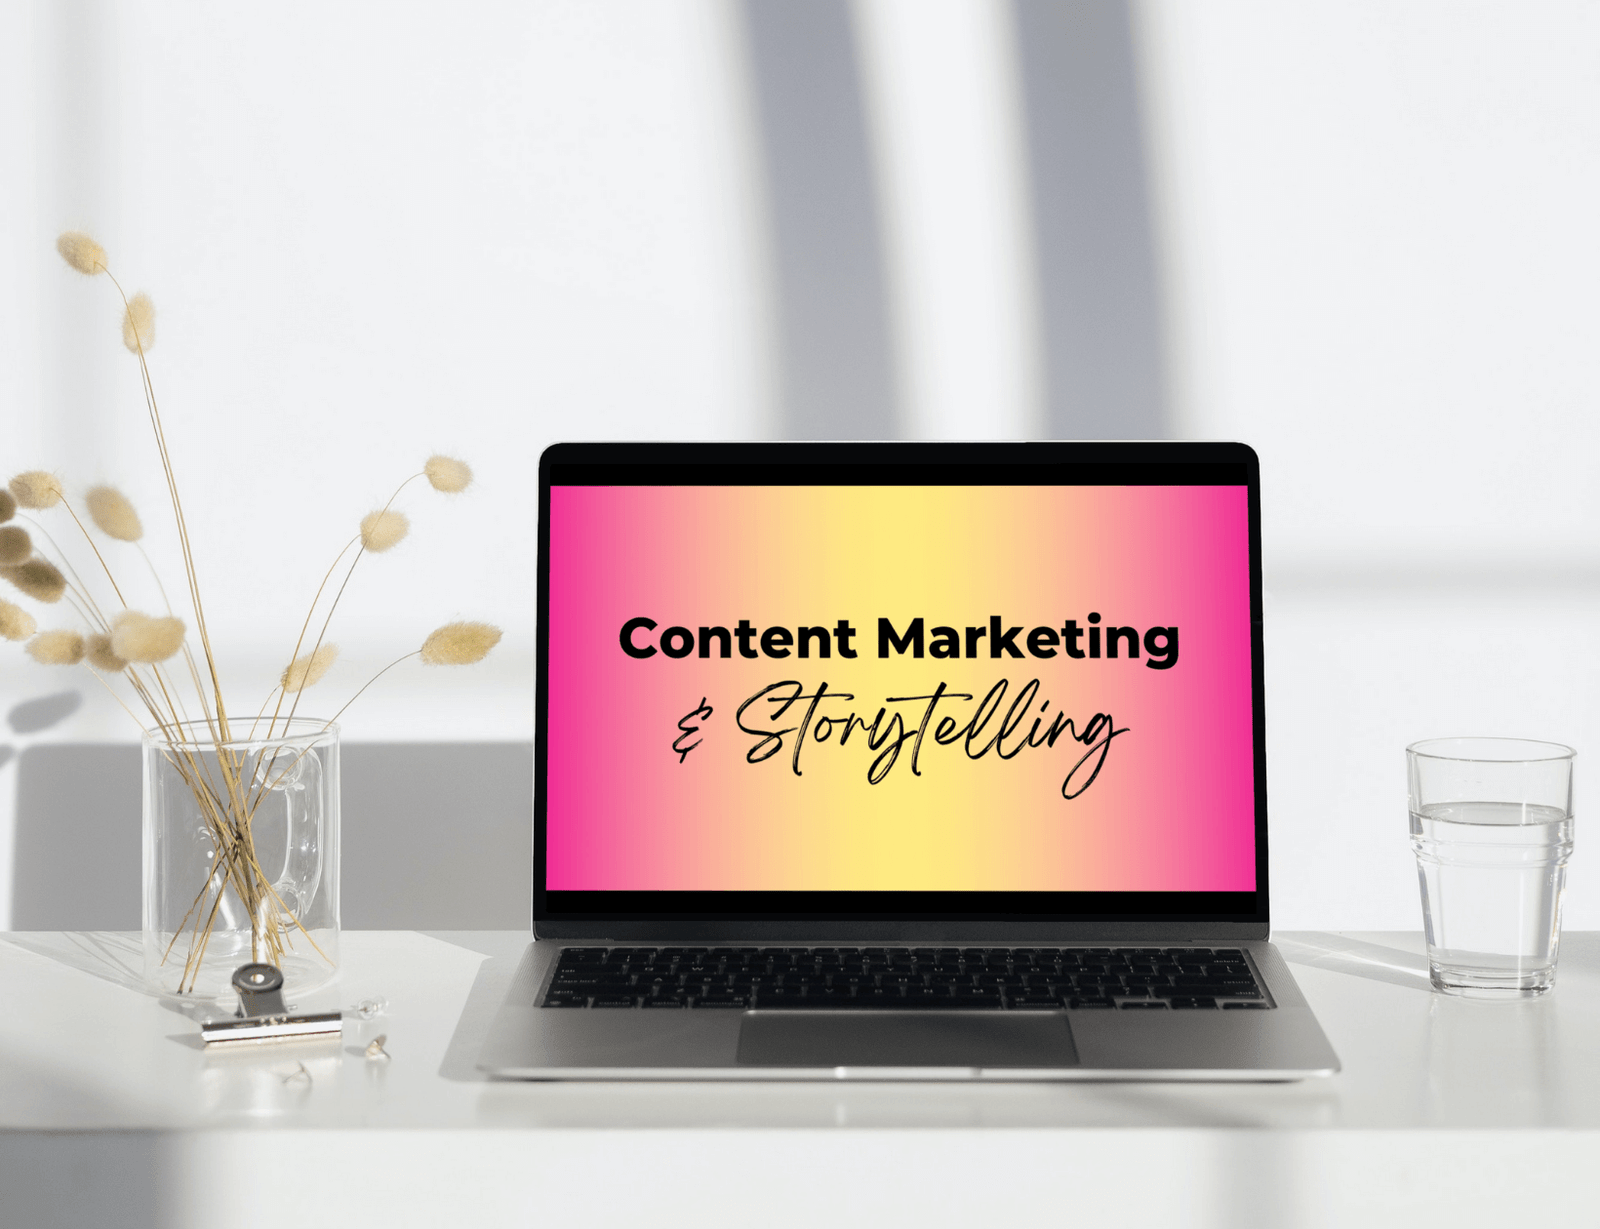 Content Marketing & Storytelling